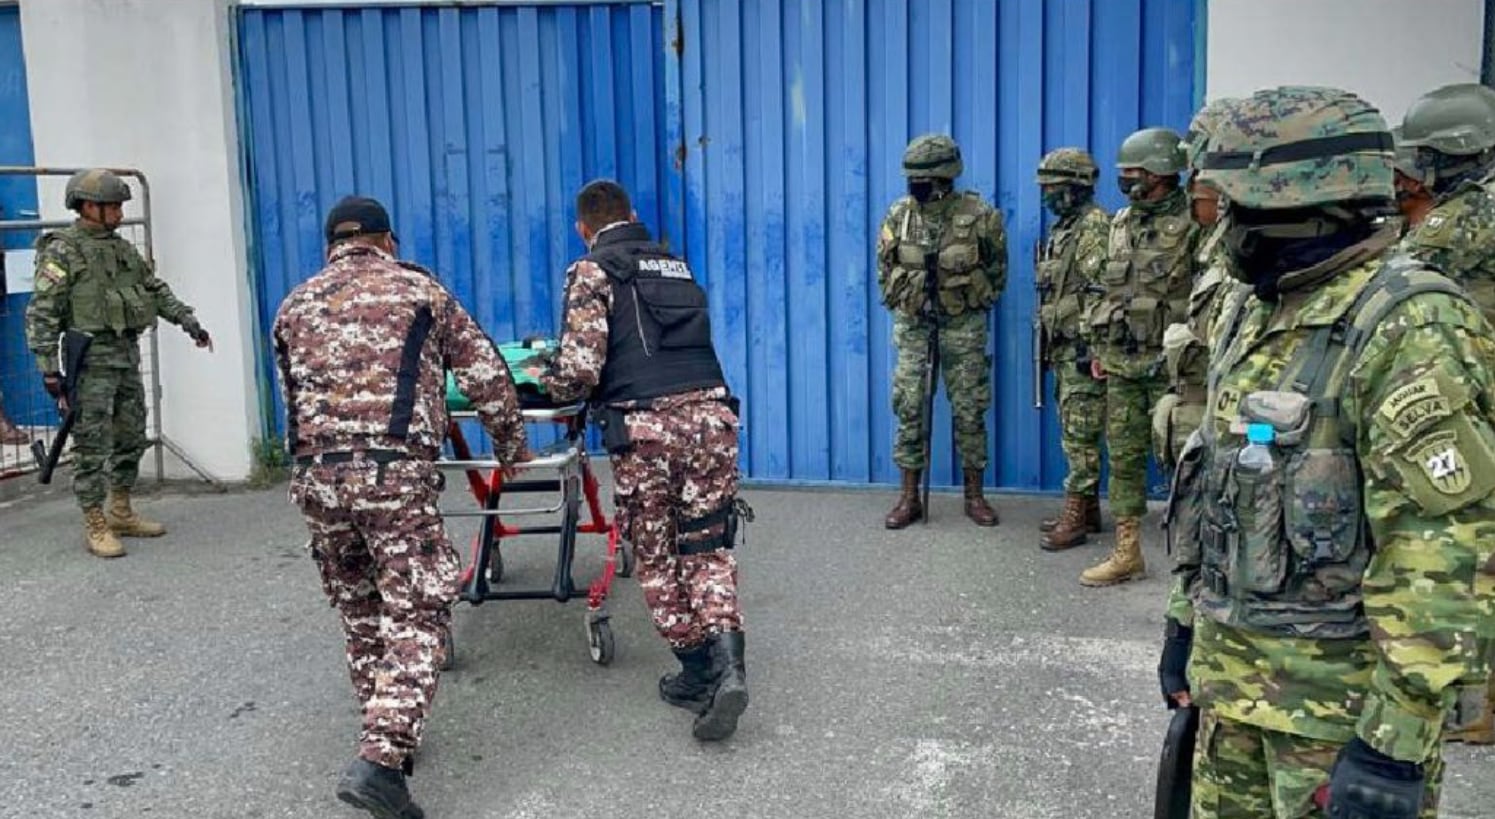 At least six prisoners were murdered in a prison in Ecuador - credit @soscarcelesec/X